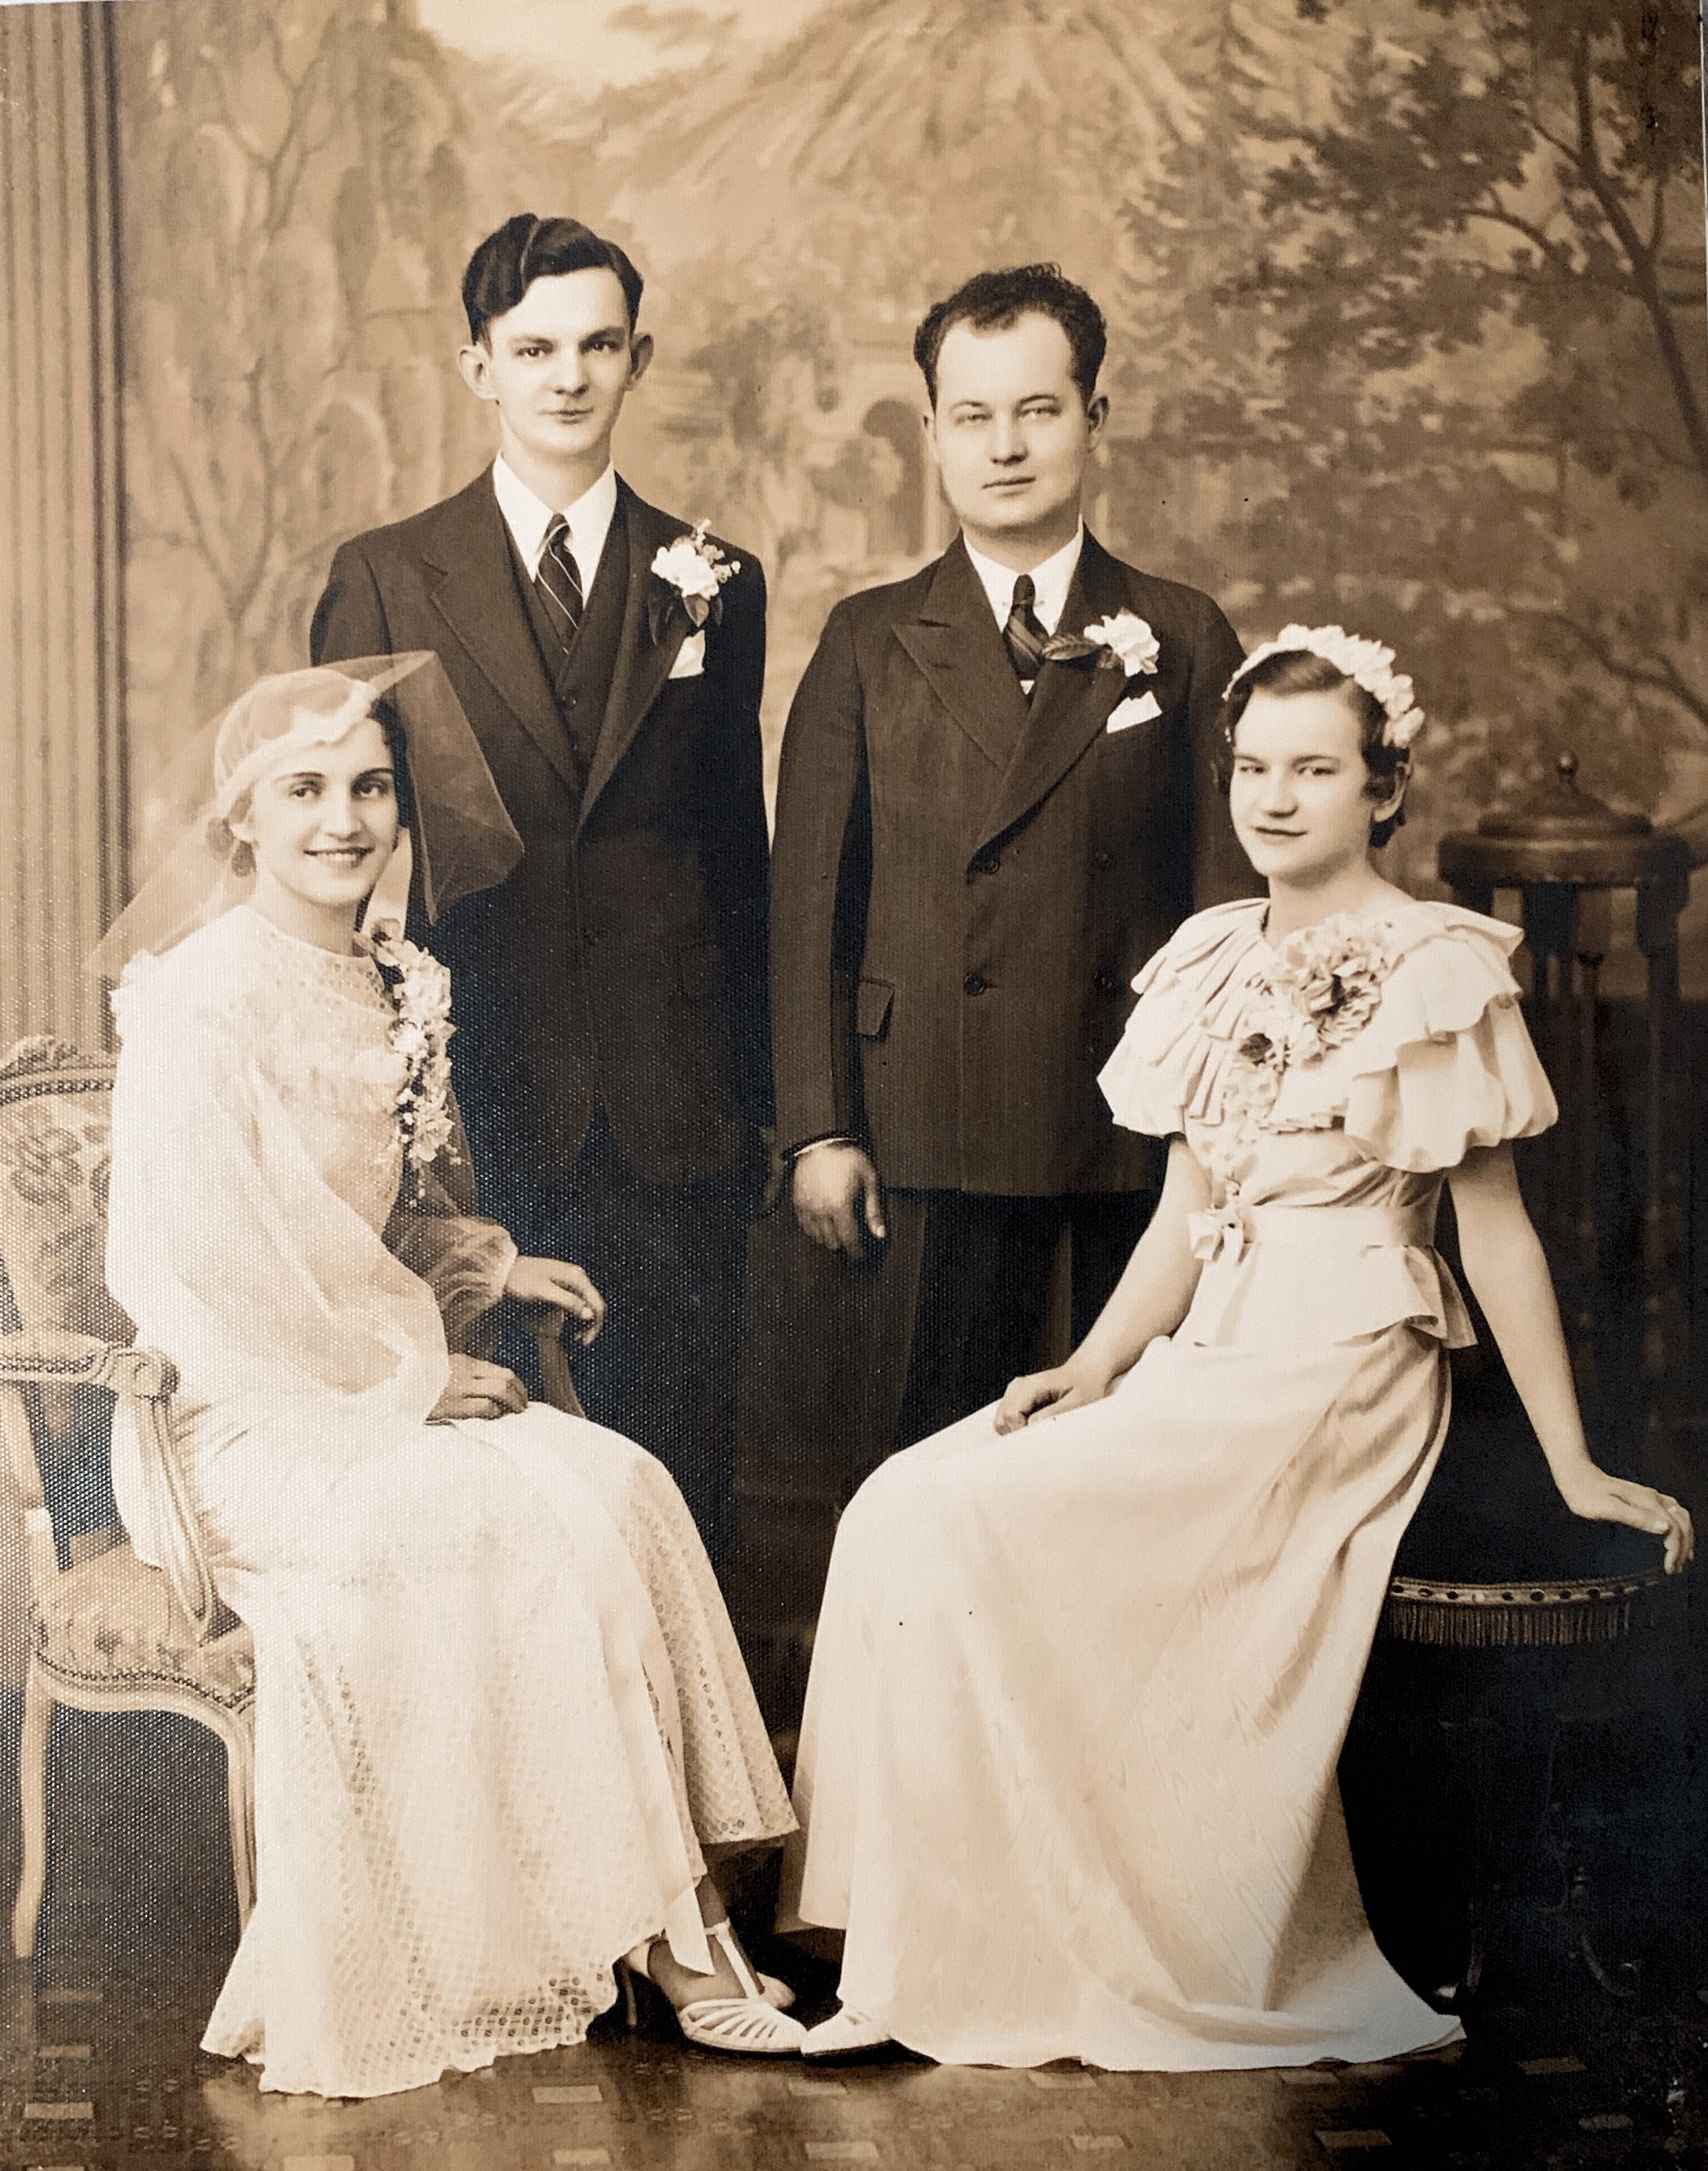 Wedding day May 2, 1936 Alphonse A Marcis(zewski) and Elizabeth Evelyn Bolewski Attendants: Leo Urbanski and Lillian Marciszewski